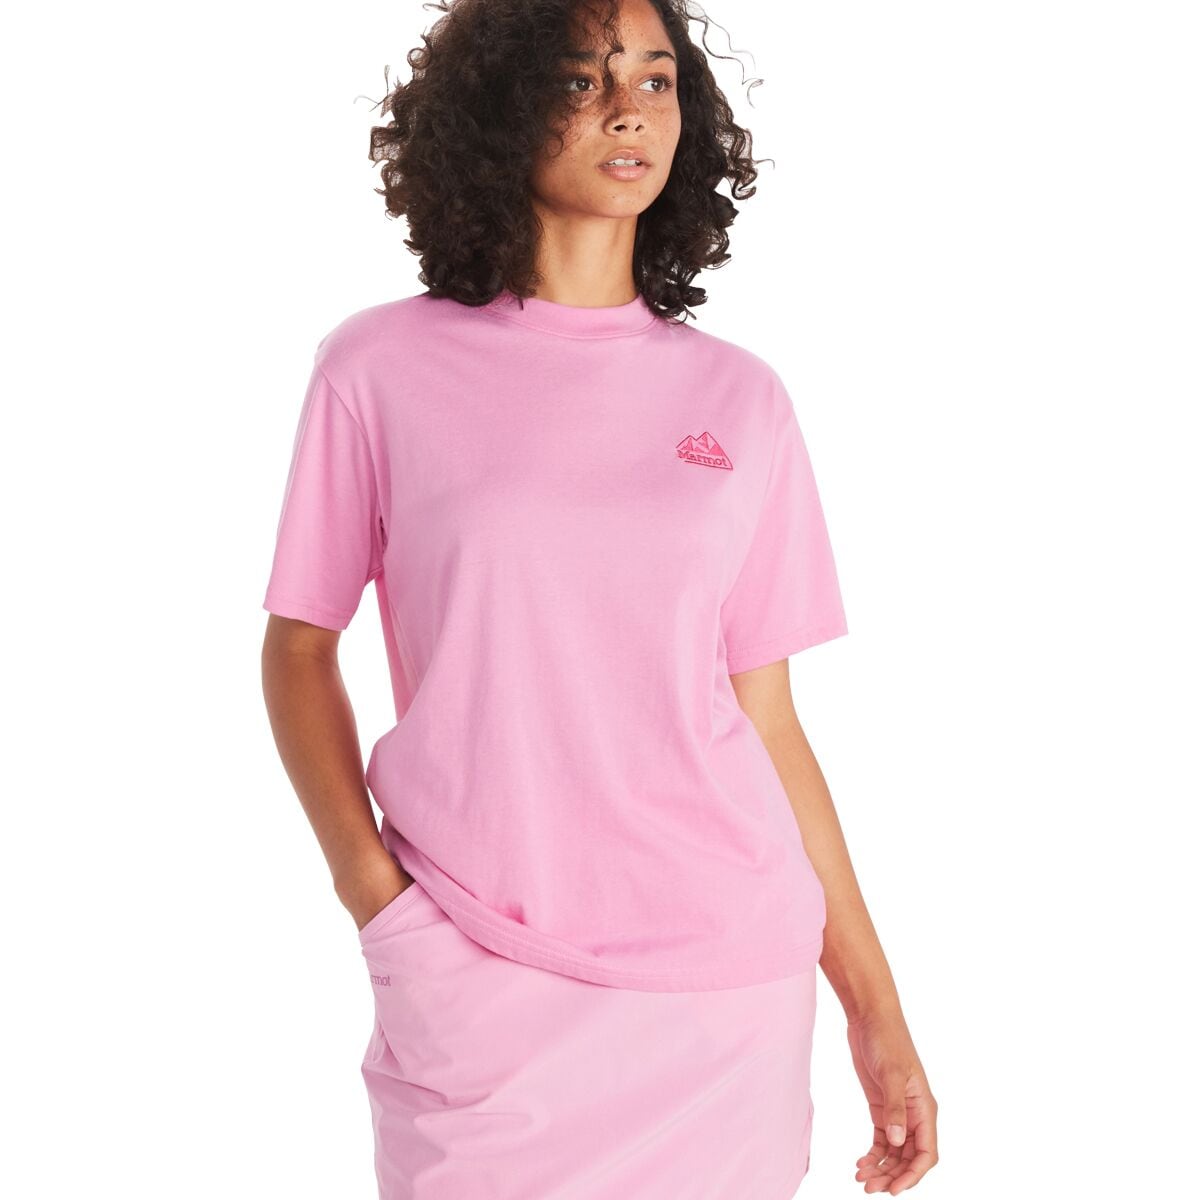 Peaks Short-Sleeve T-Shirt - Women